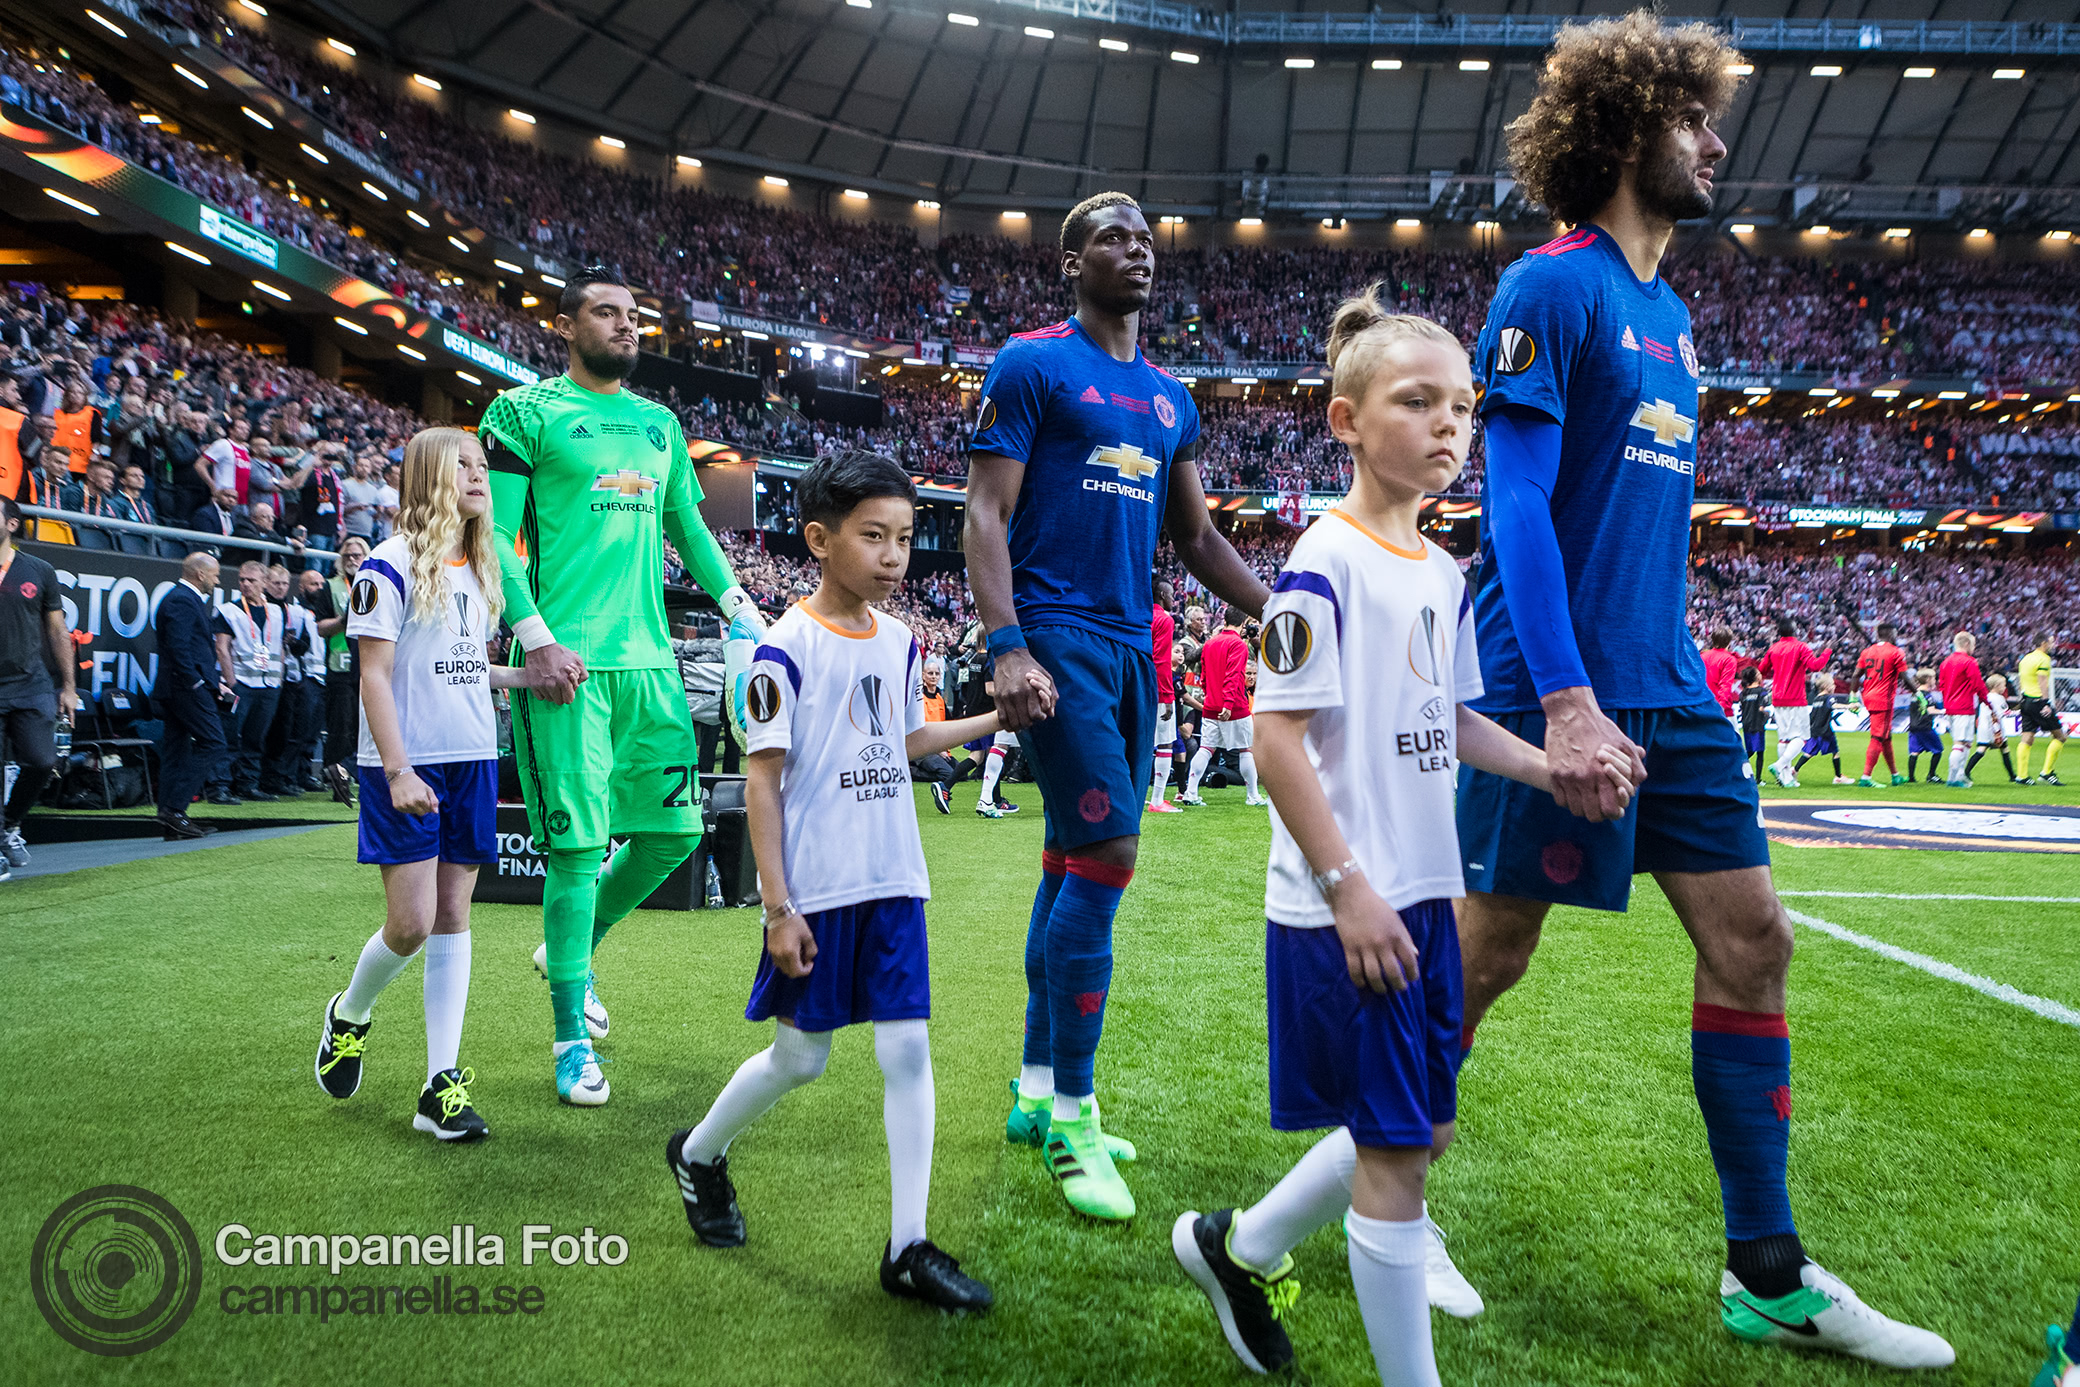 Europa League Final comes to Stockholm - Michael Campanella Photography